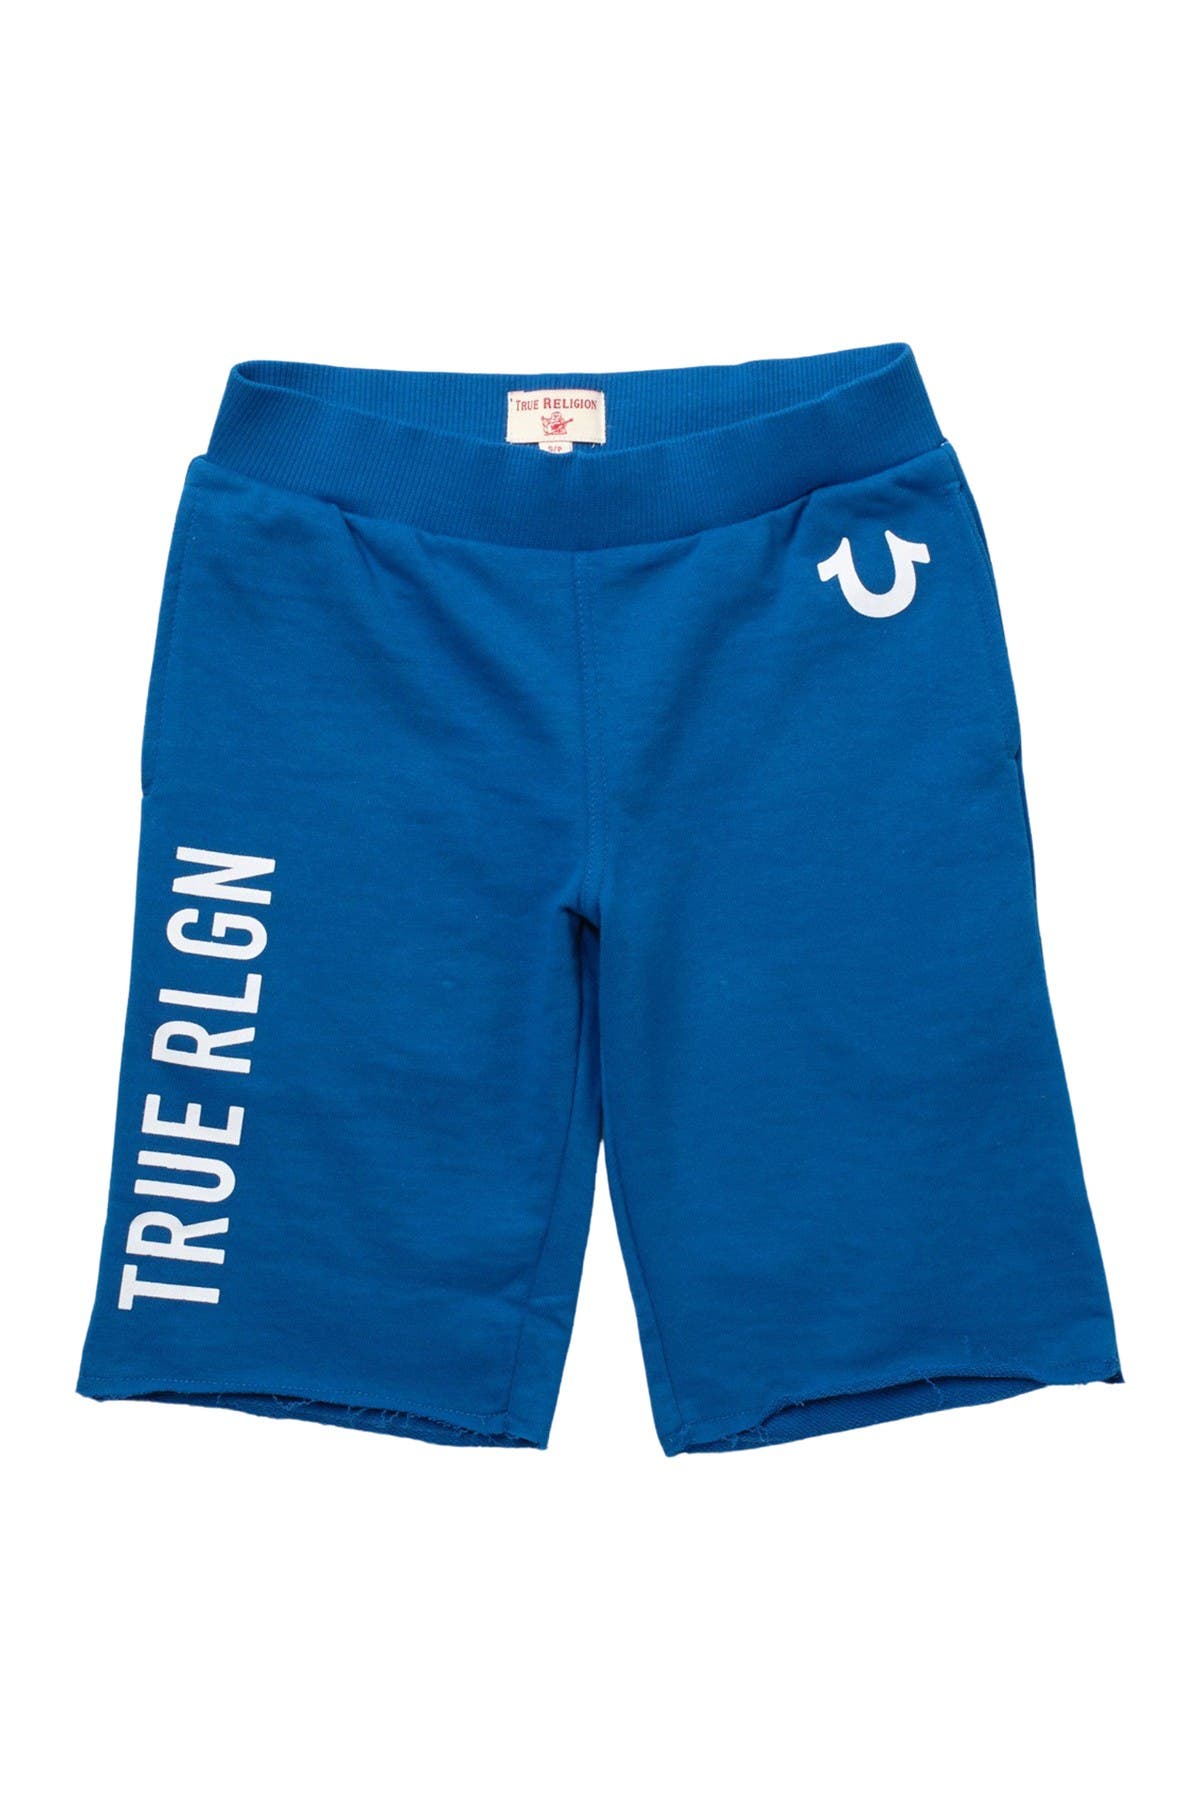 true religion sweat shorts